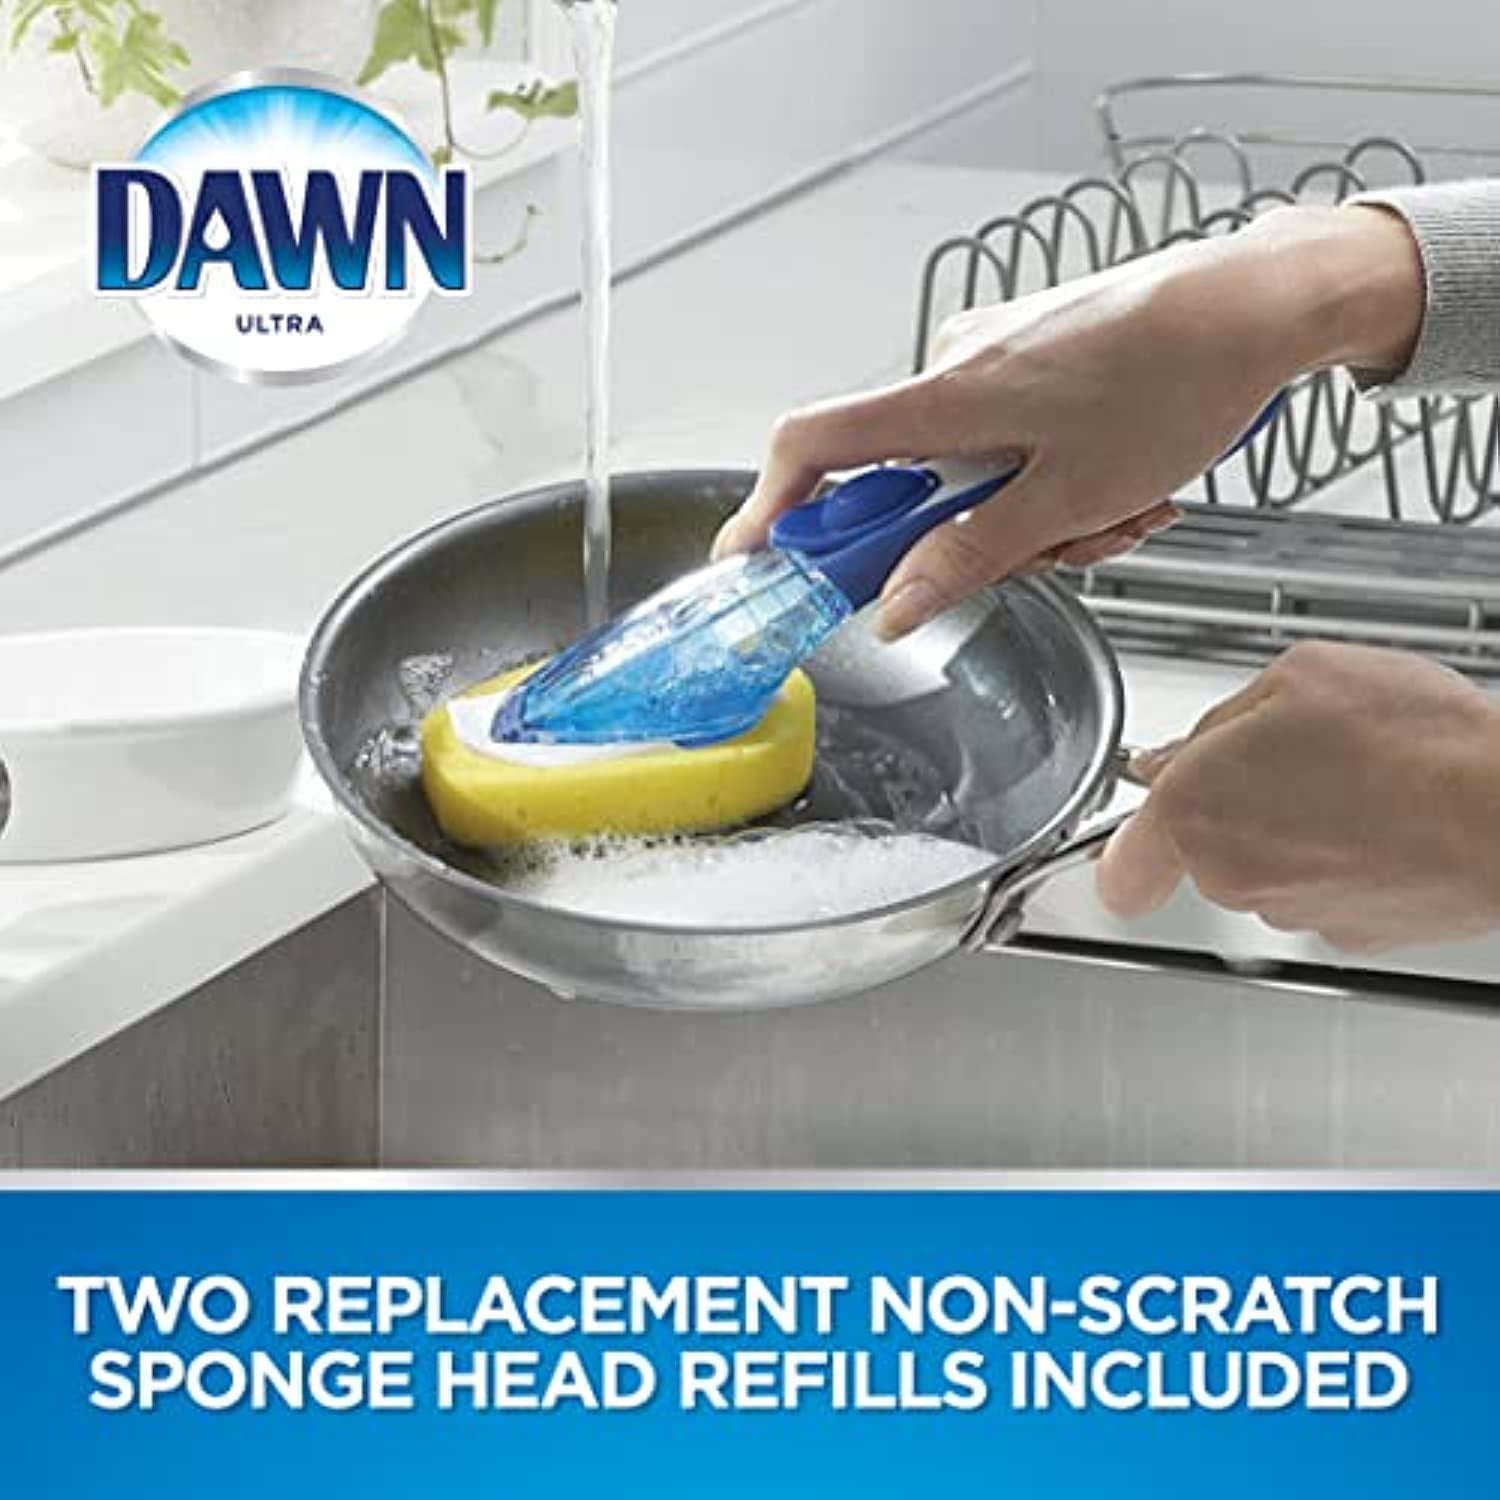 Do these sponge wands always leak? : r/mildlyinfuriating